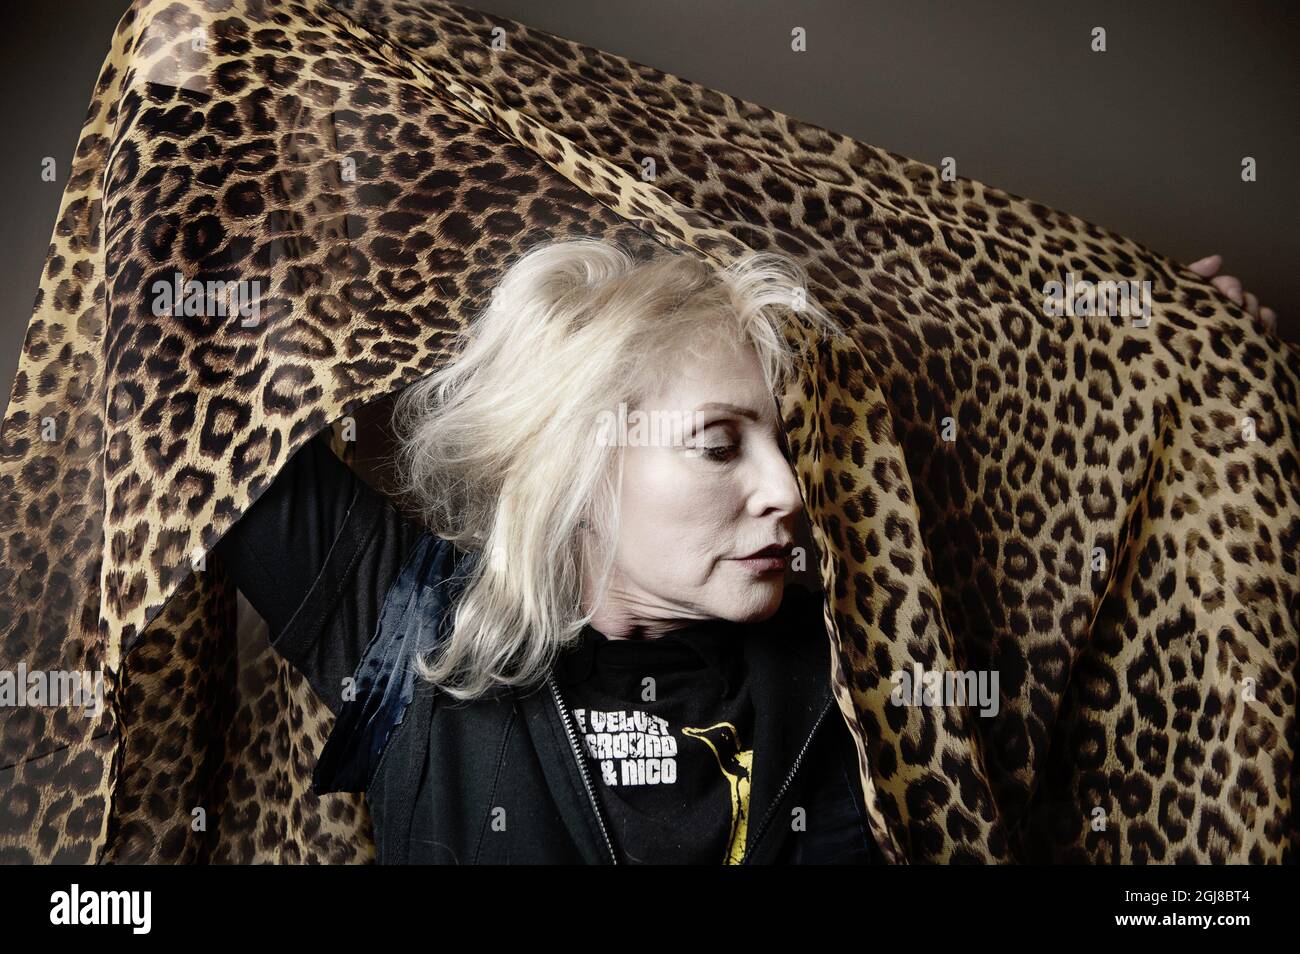 STOCKHOLM 2014-02-03 il cantante americano Debbie Harry della band punk rock Blondie. Foto: Pi Frisk / SVD / TT / Kod 30583 Foto Stock